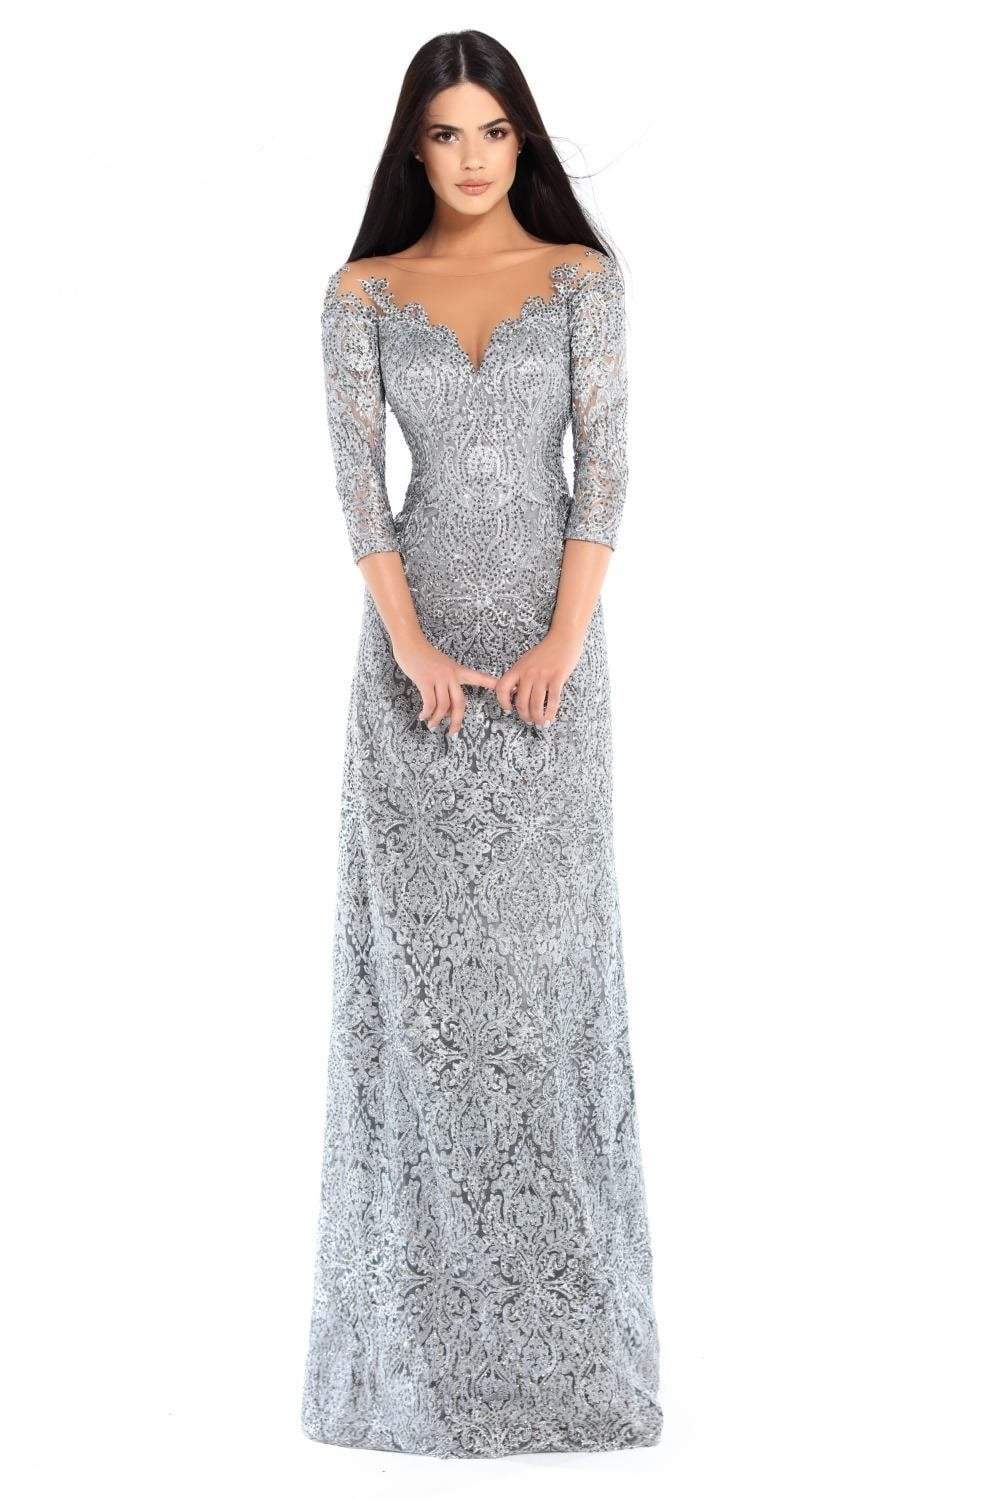 Tarik Ediz - 93677 Illusion Quarter Sleeve Jewel Adorned Sheath Gown In Silver